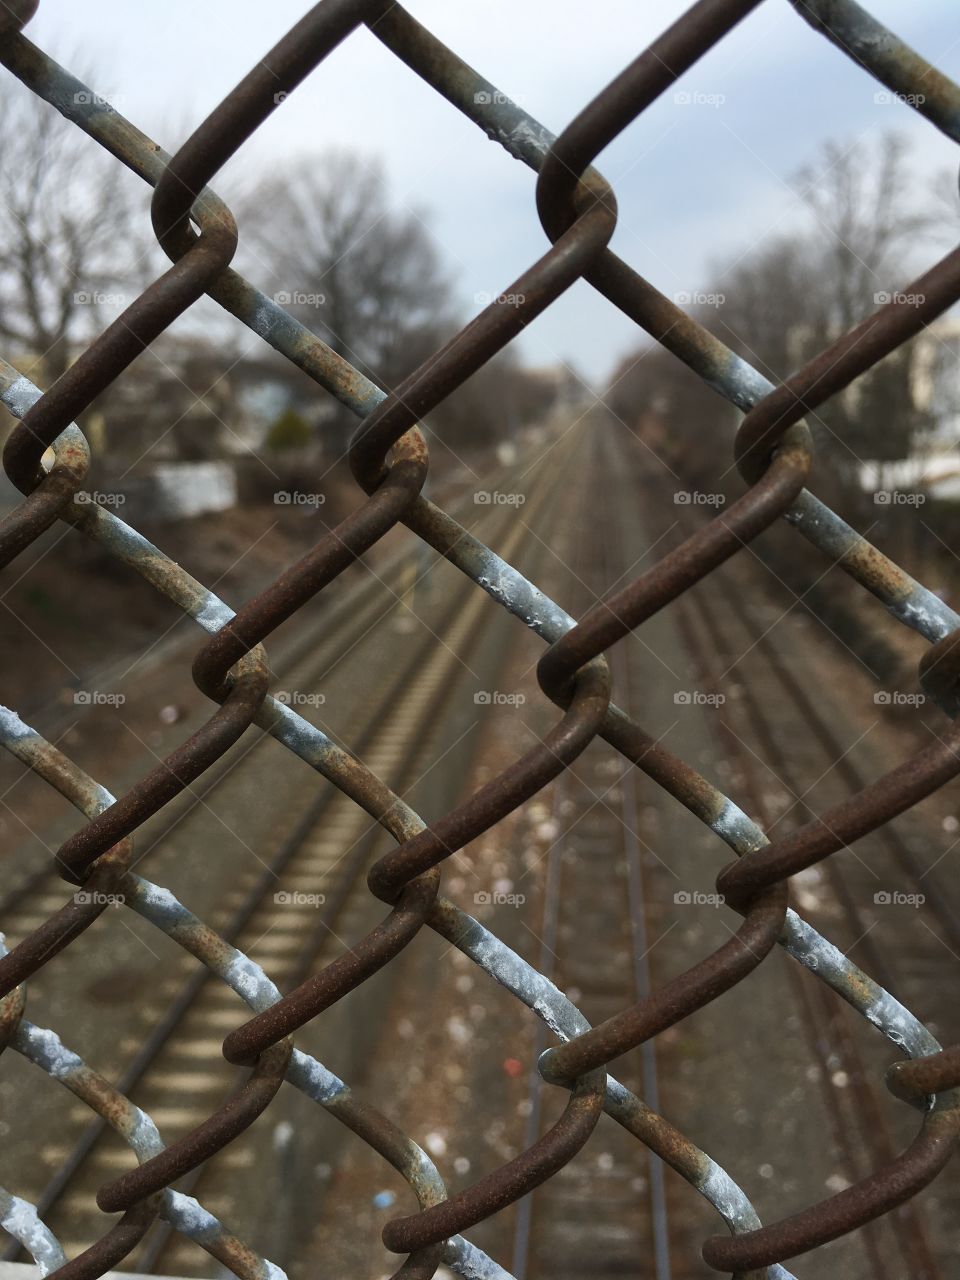 Railroad tracks seen through a chain link fence